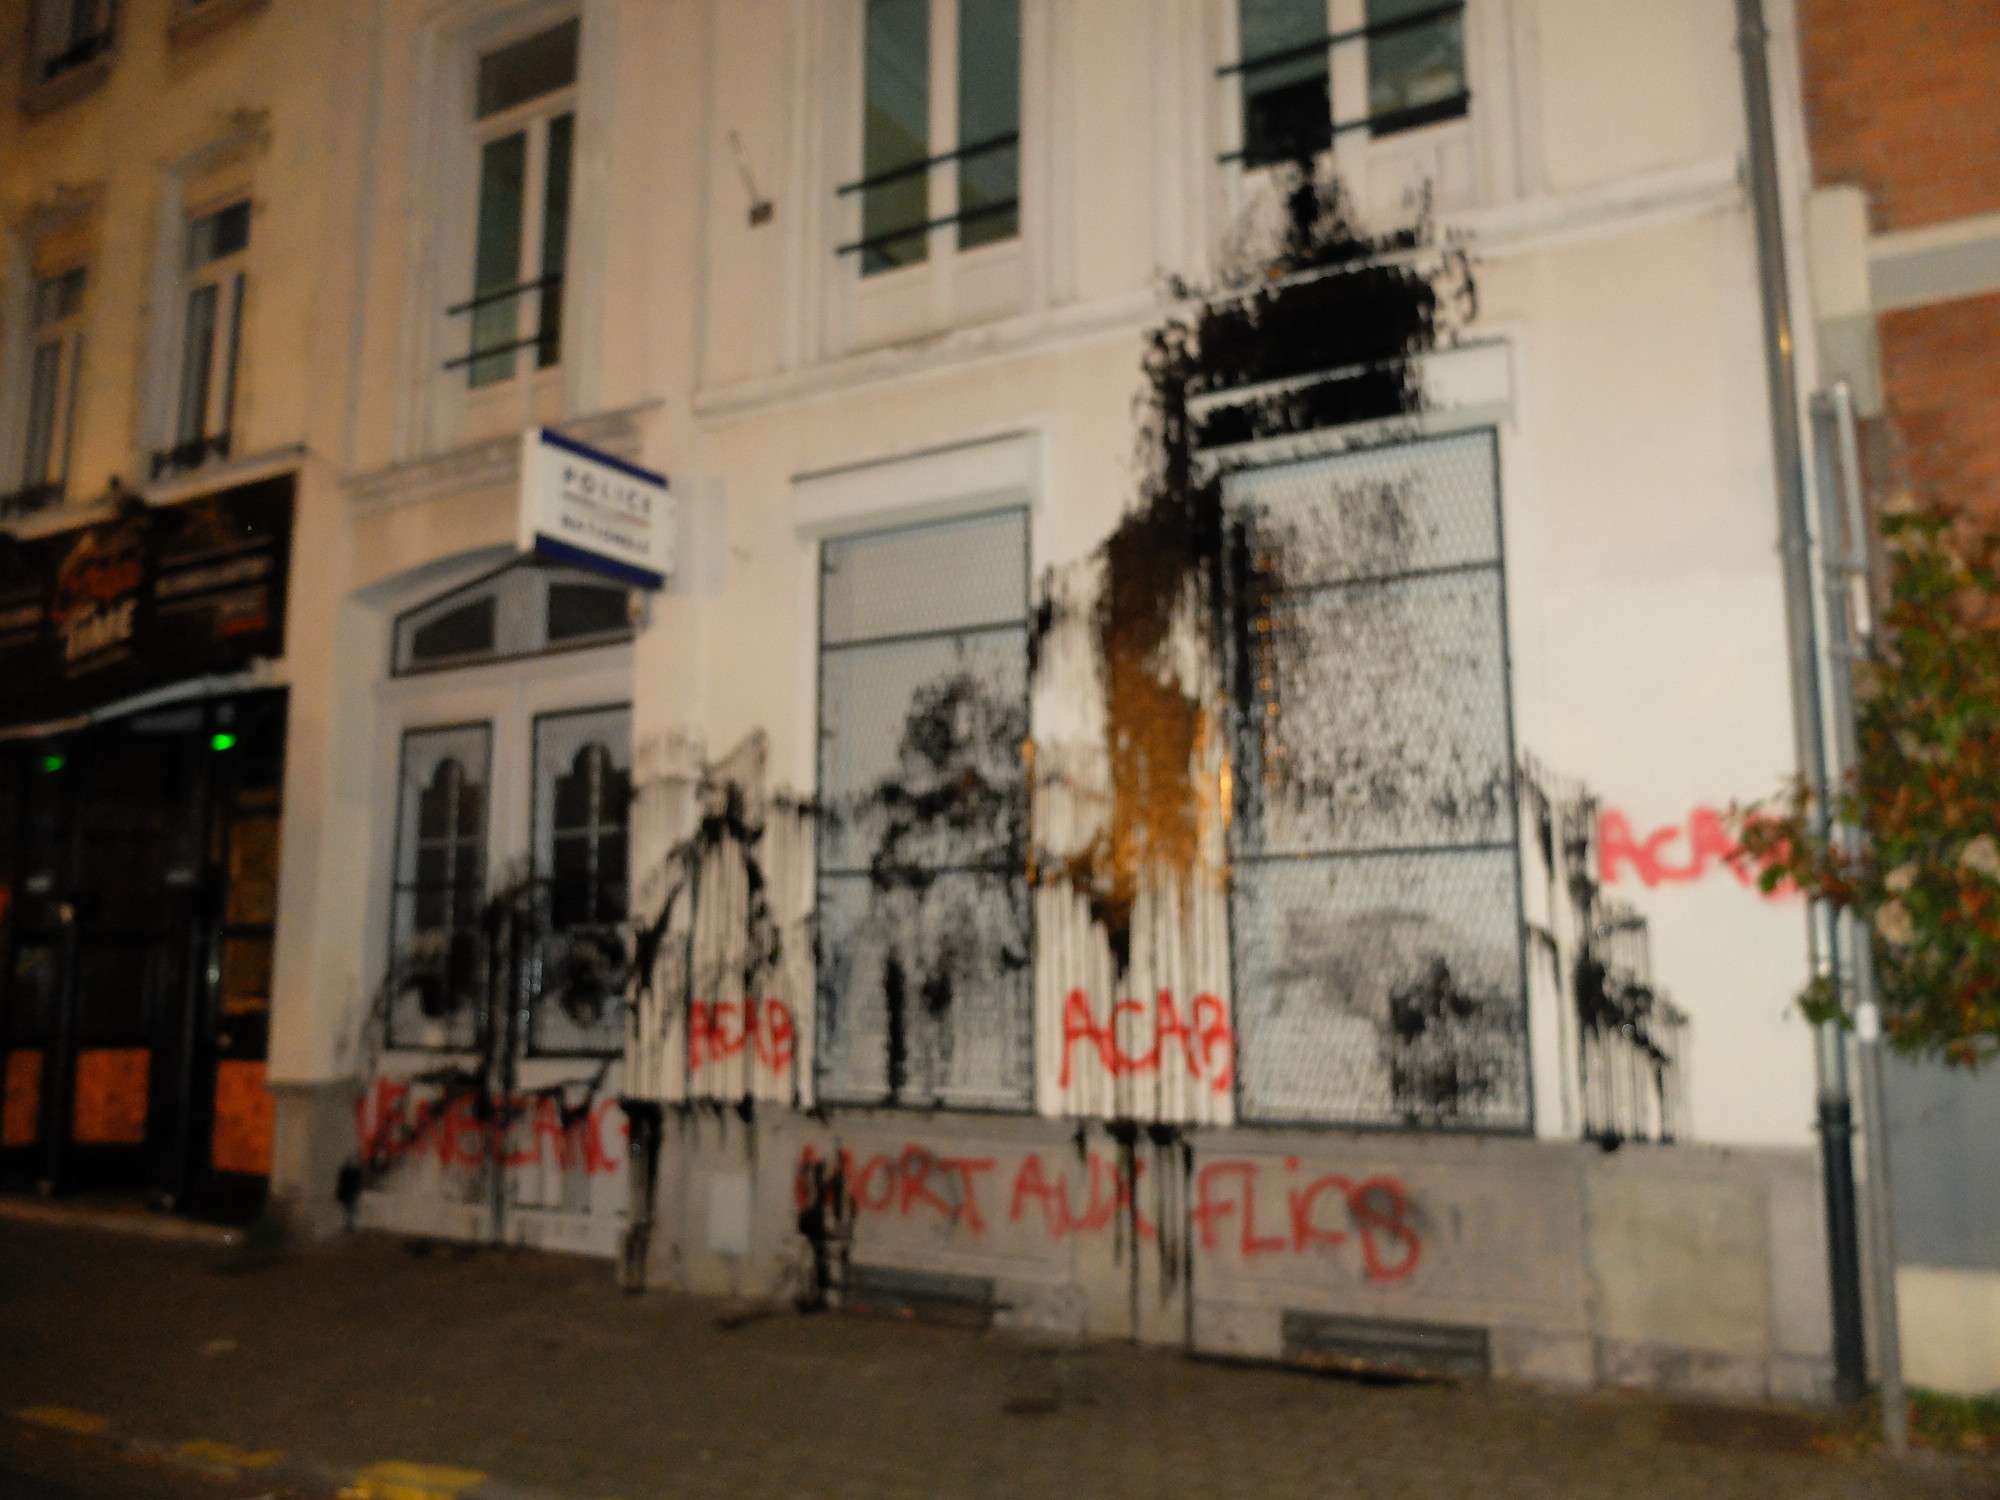 Lille, France: Beginning of revenge against a police station